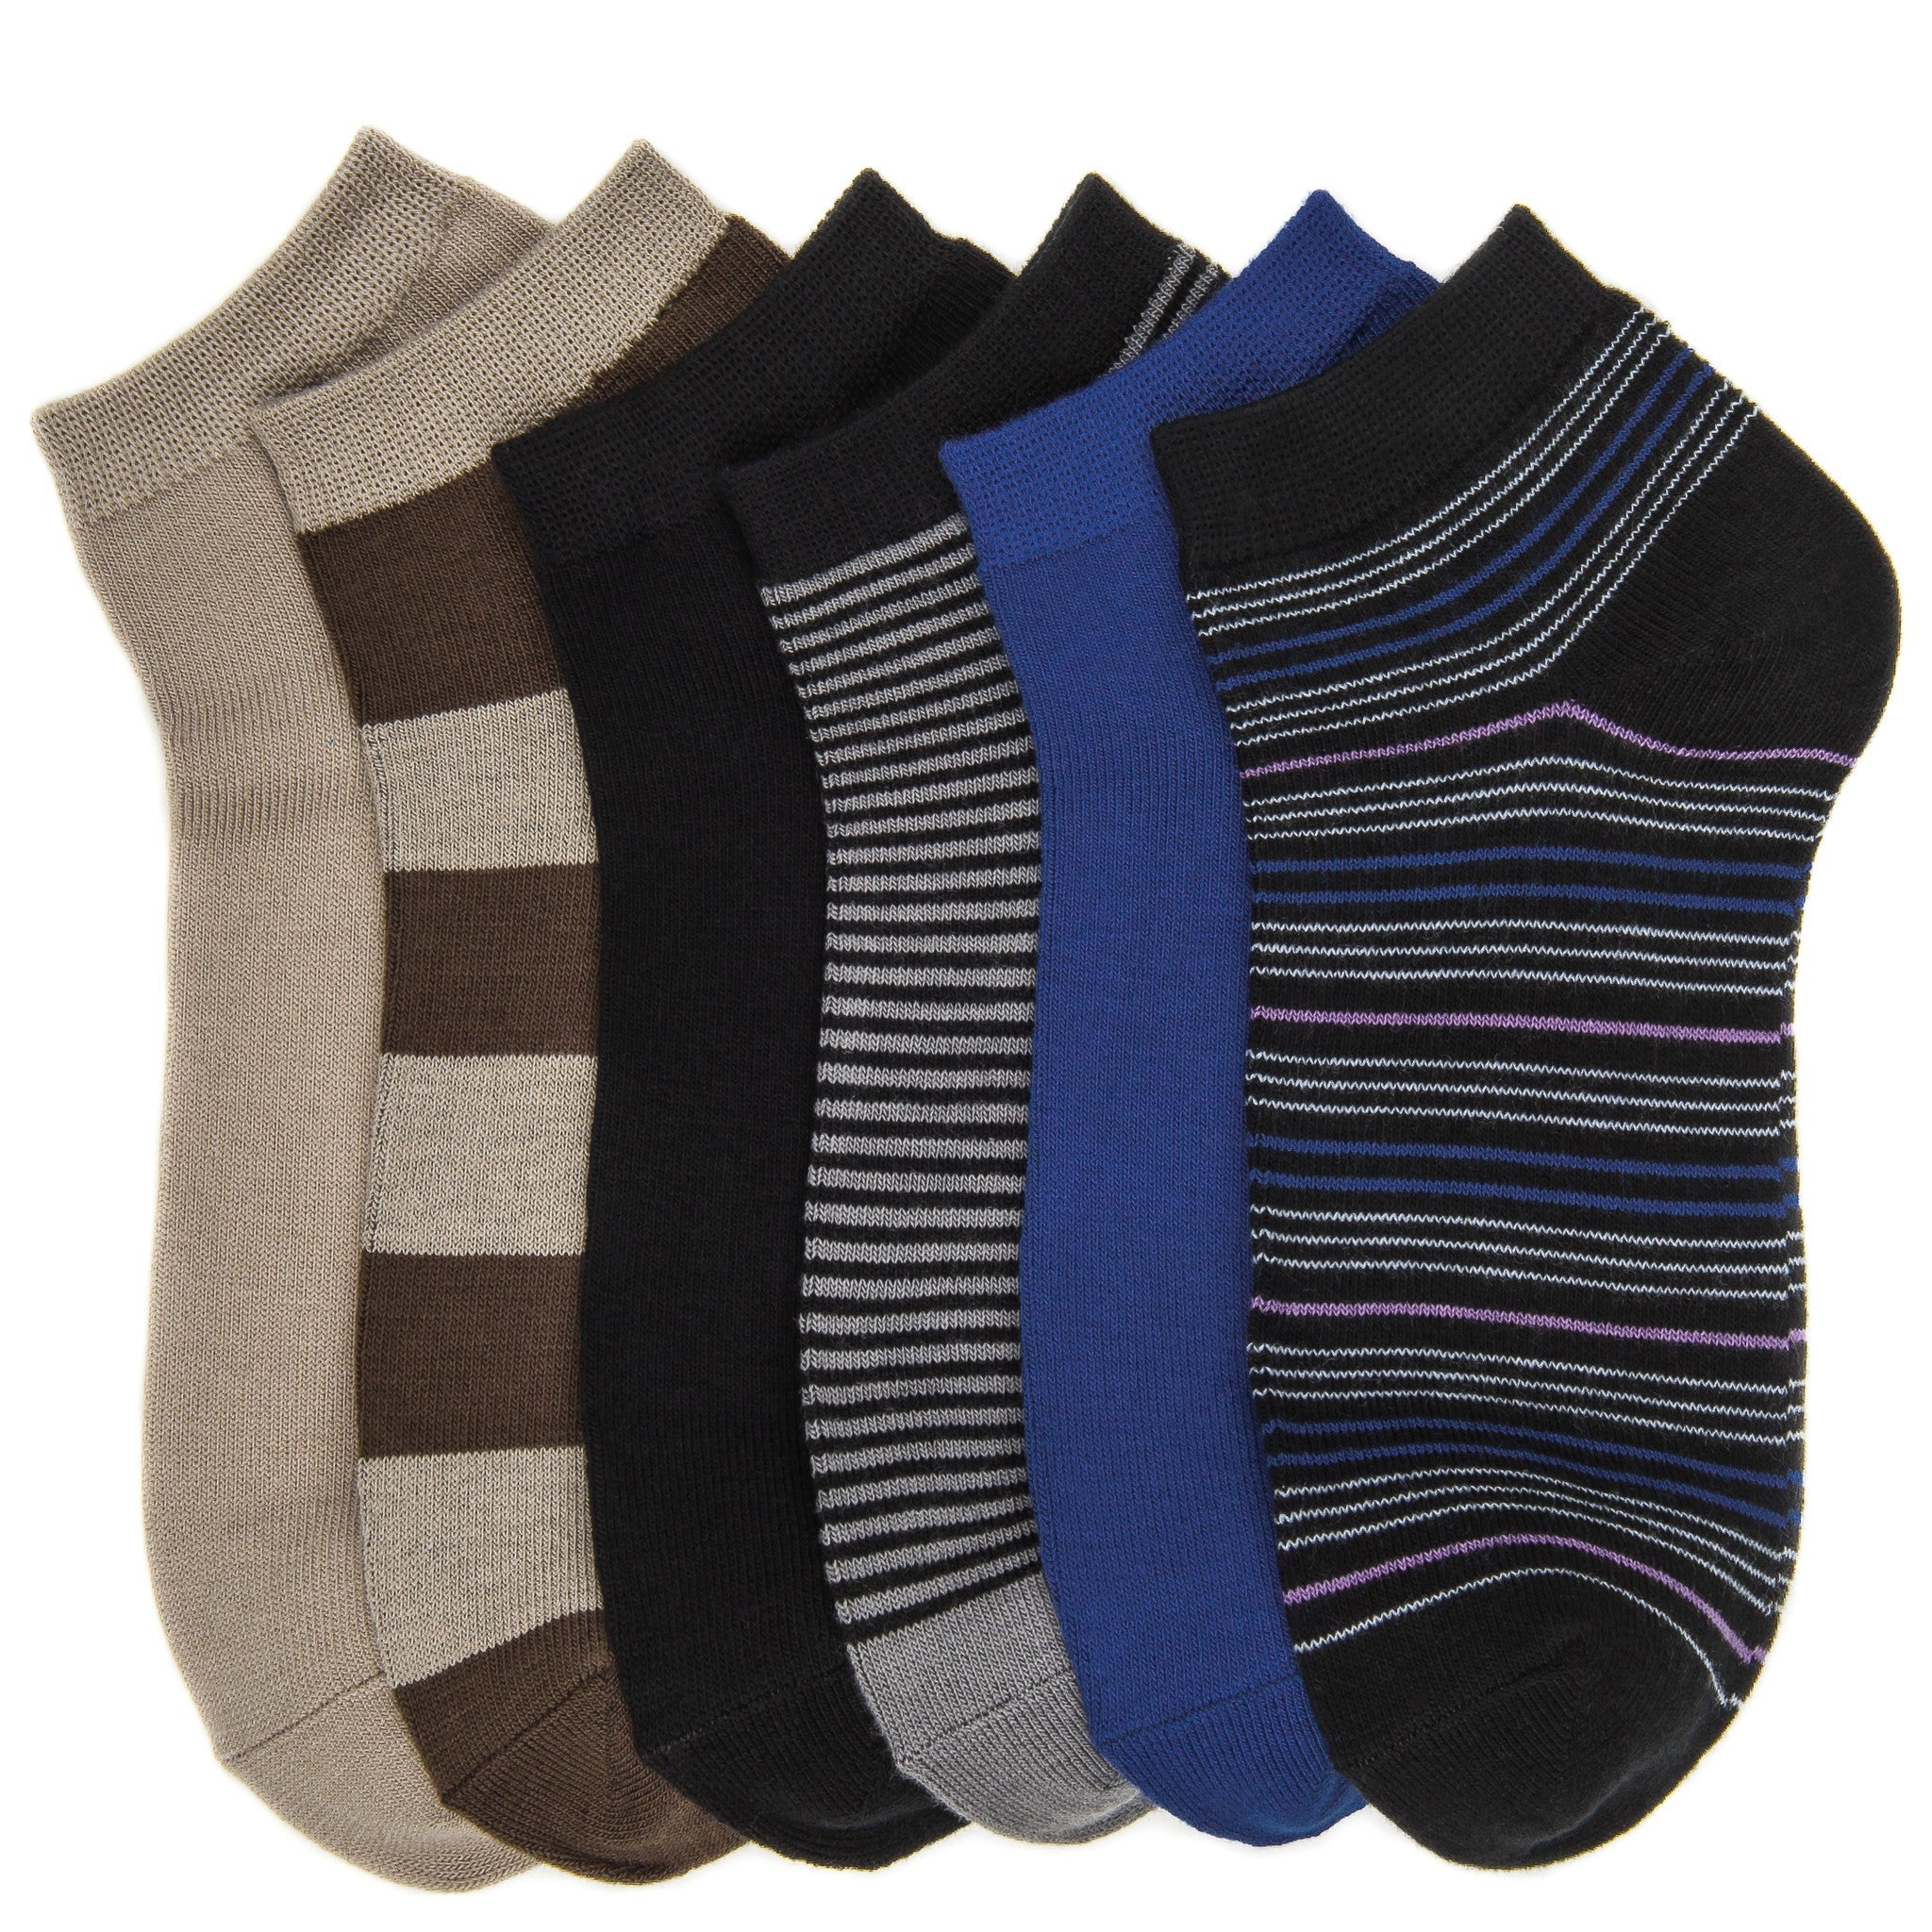 Women's Soft Premium Low Cut Socks - 6 Pairs